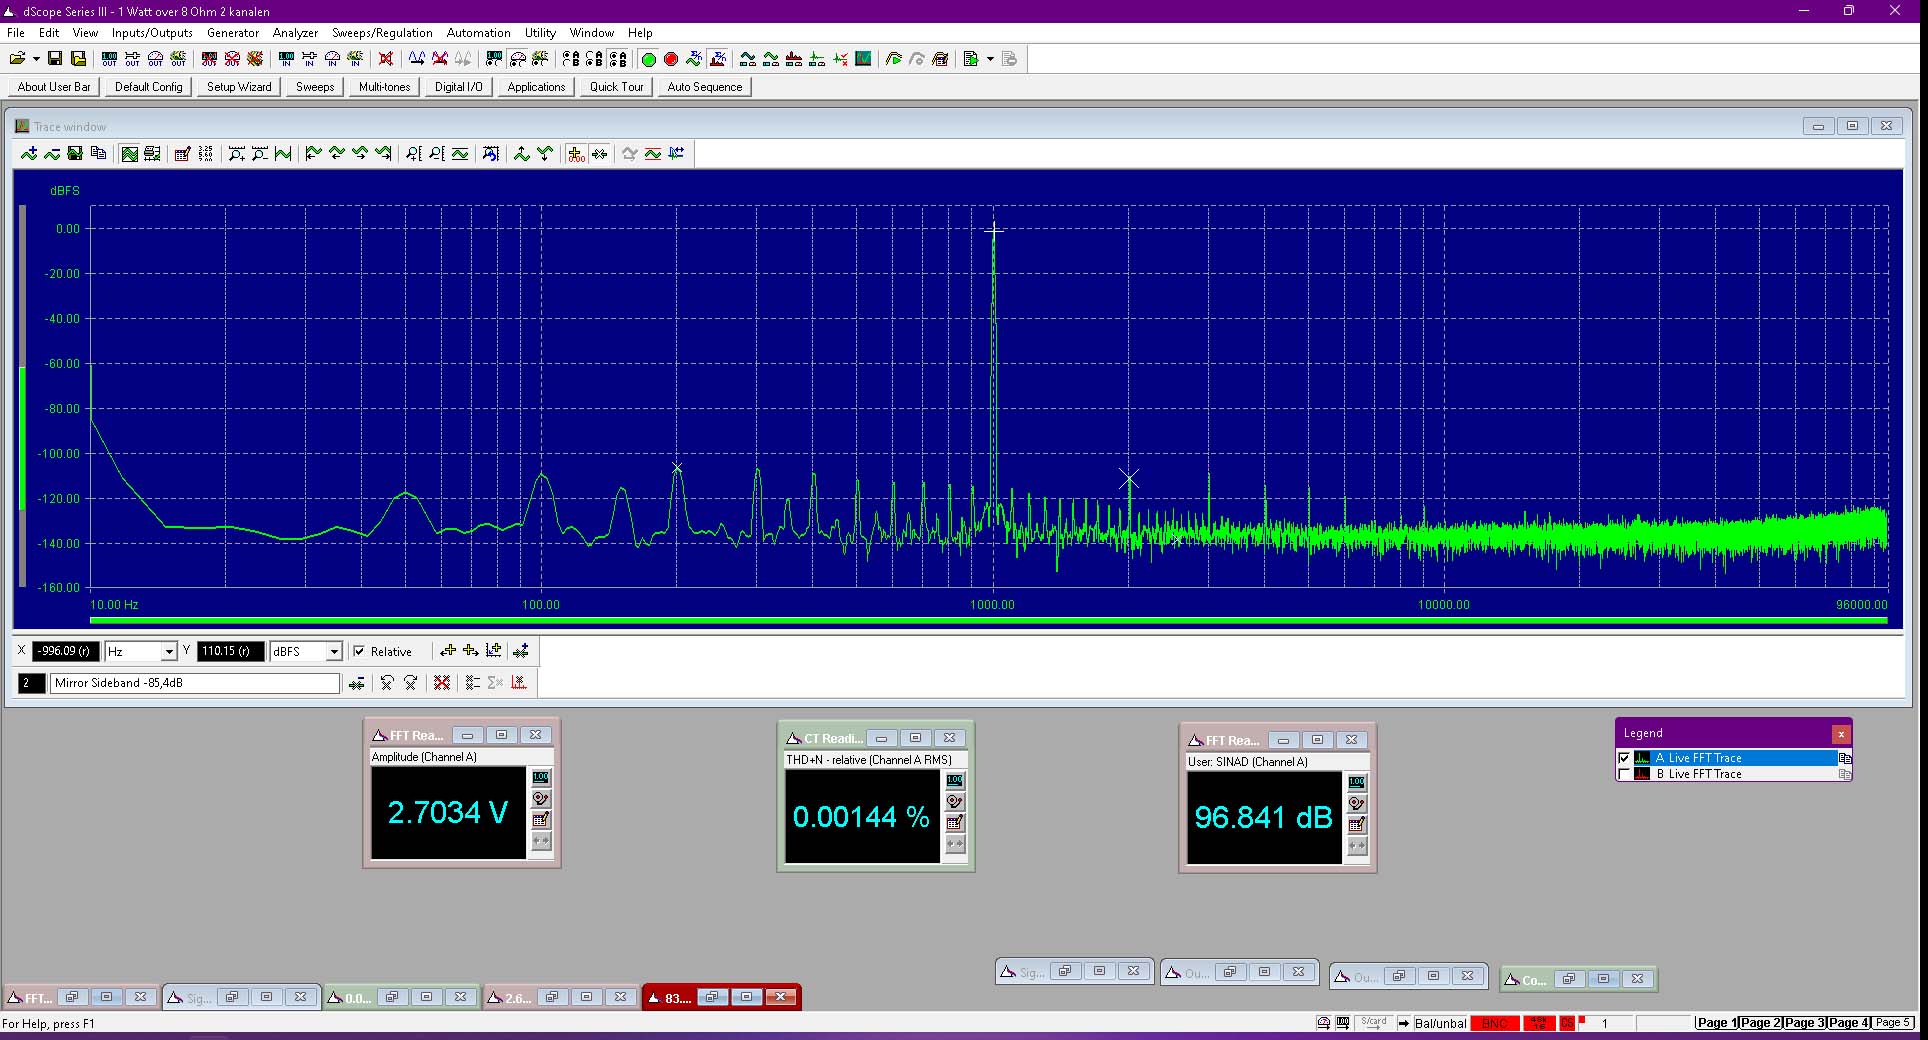 ASR Emitter 1 - 1 watt - 8 Ohm